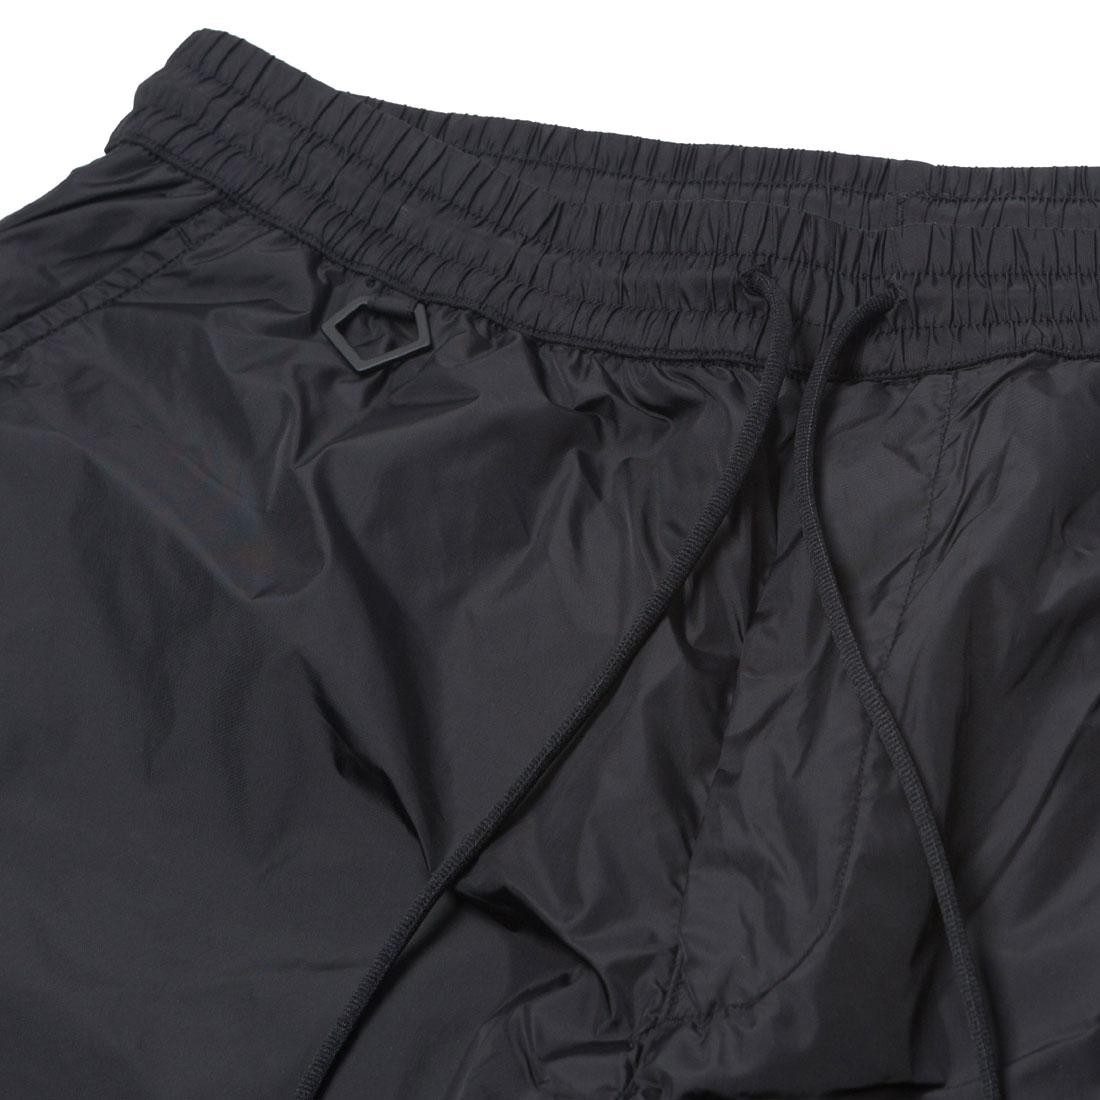 Adidas Y-3 Men Nylon Mix Track Pants (black)